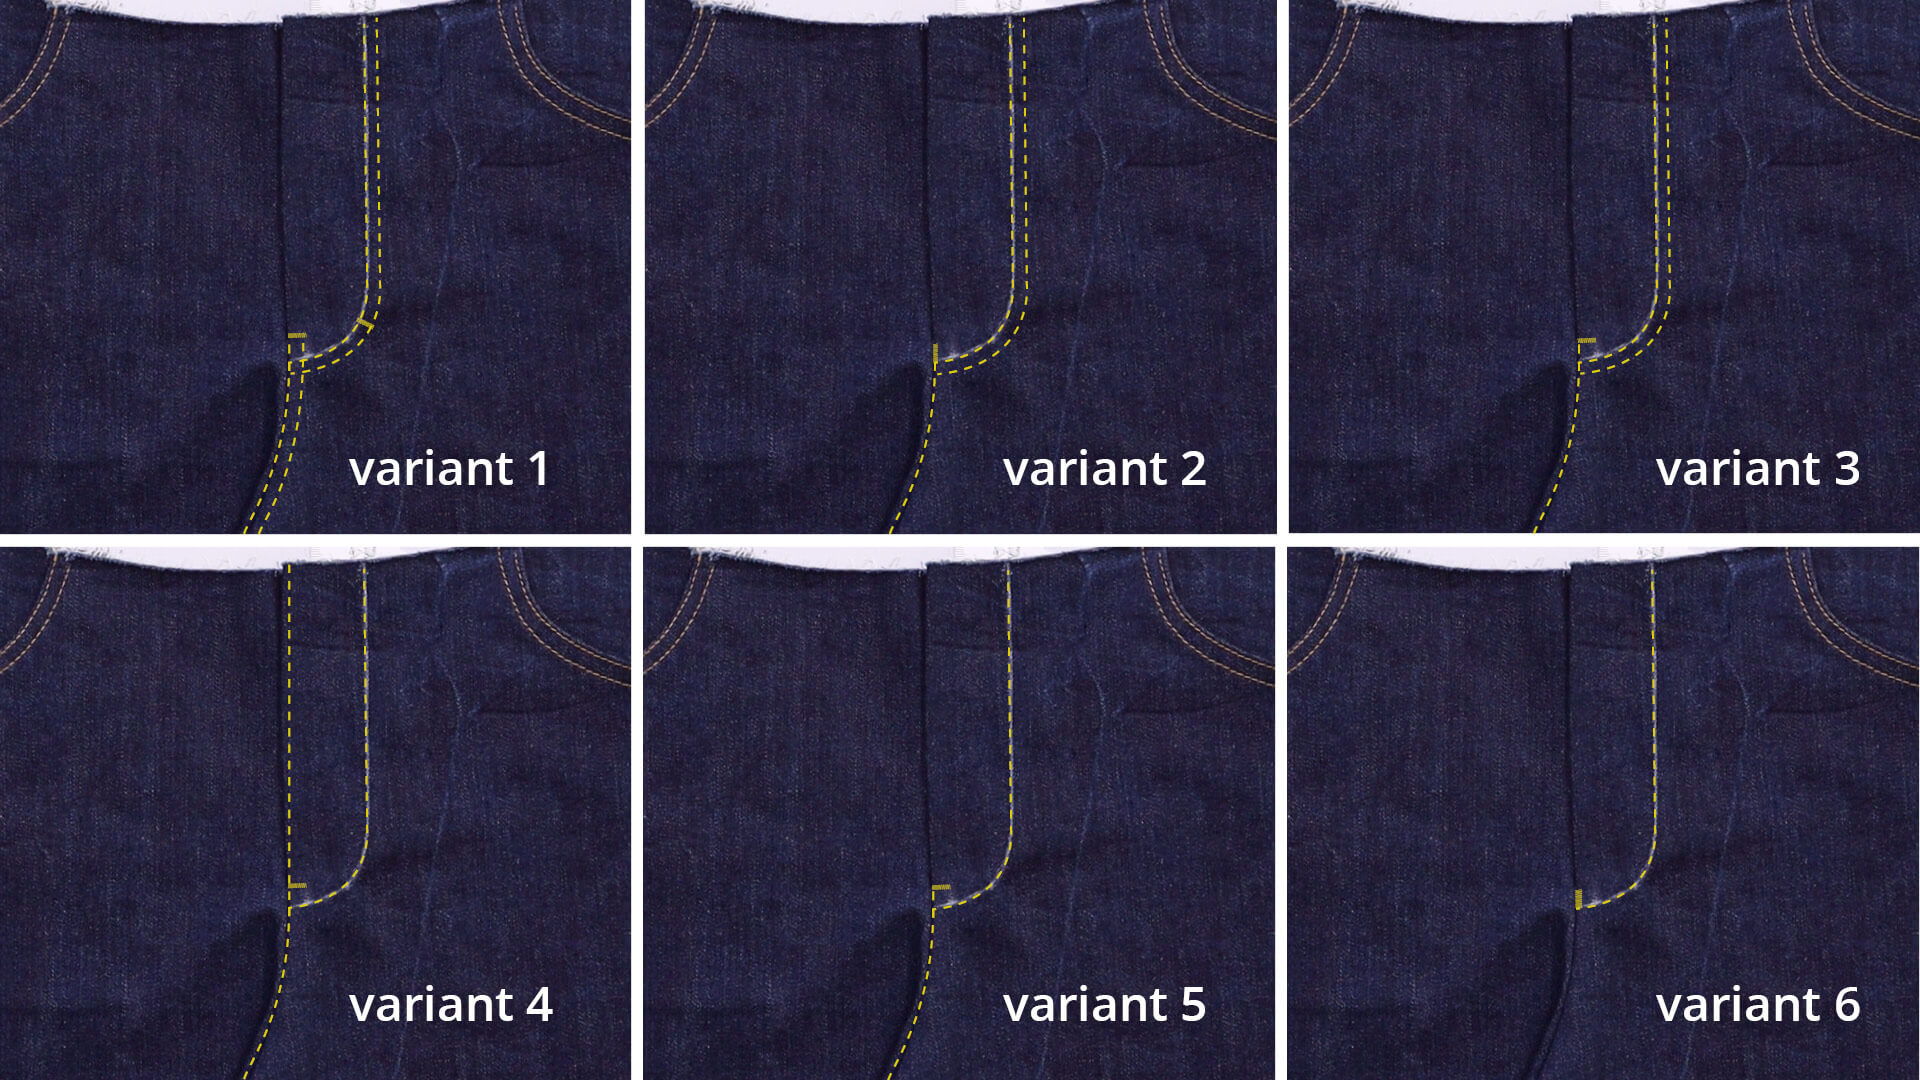 smartPATTERN sewing instructions for slit with concealed button placket on jeans - design variations for the slit design